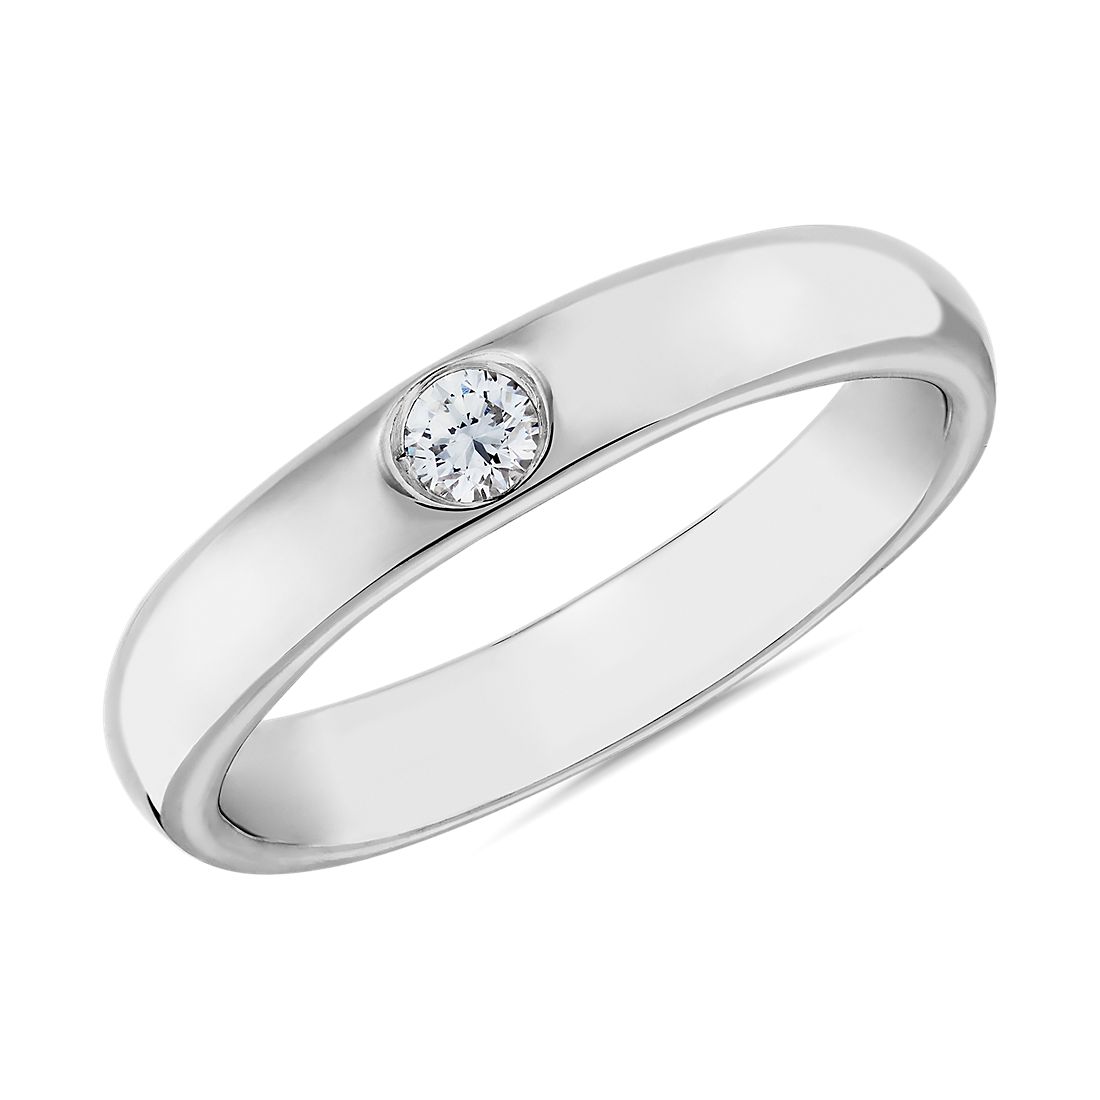 ZAC ZAC POSEN Single Round Diamond Ring in Platinum (3.5 mm, 0.08 ct. tw.)